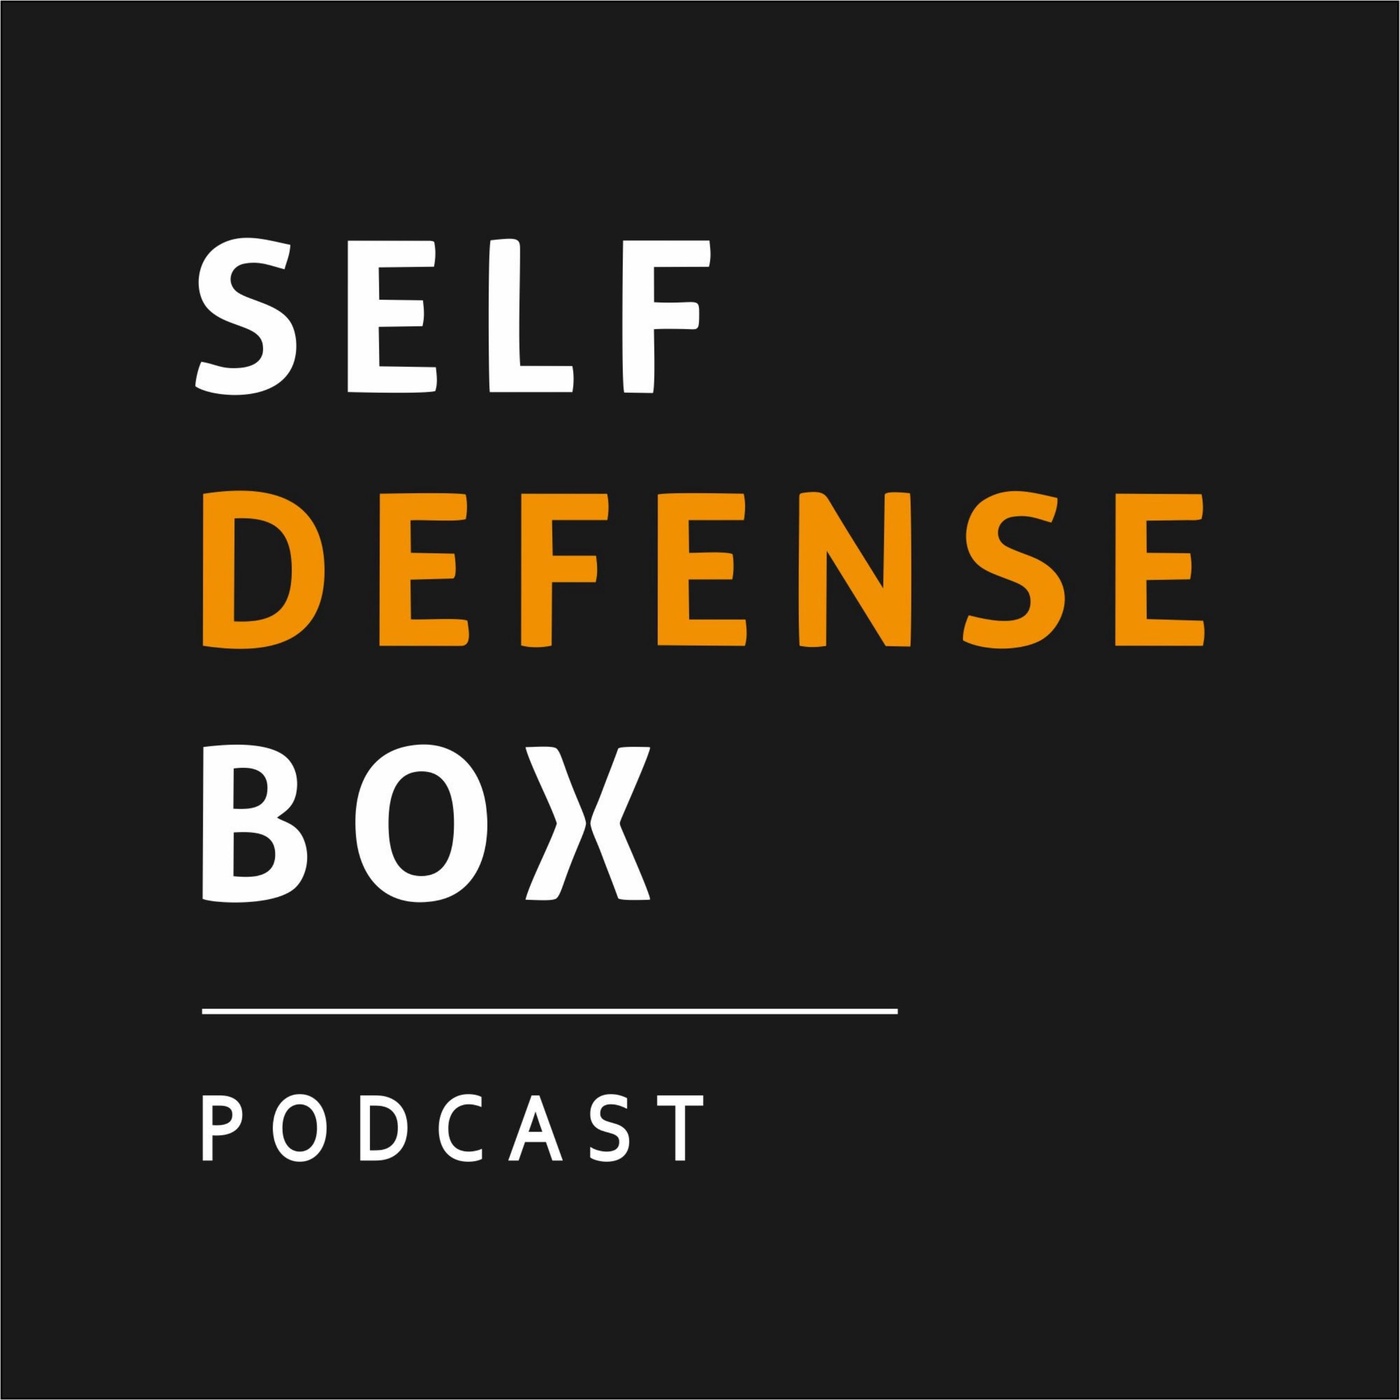 Selfdefensebox Podcast